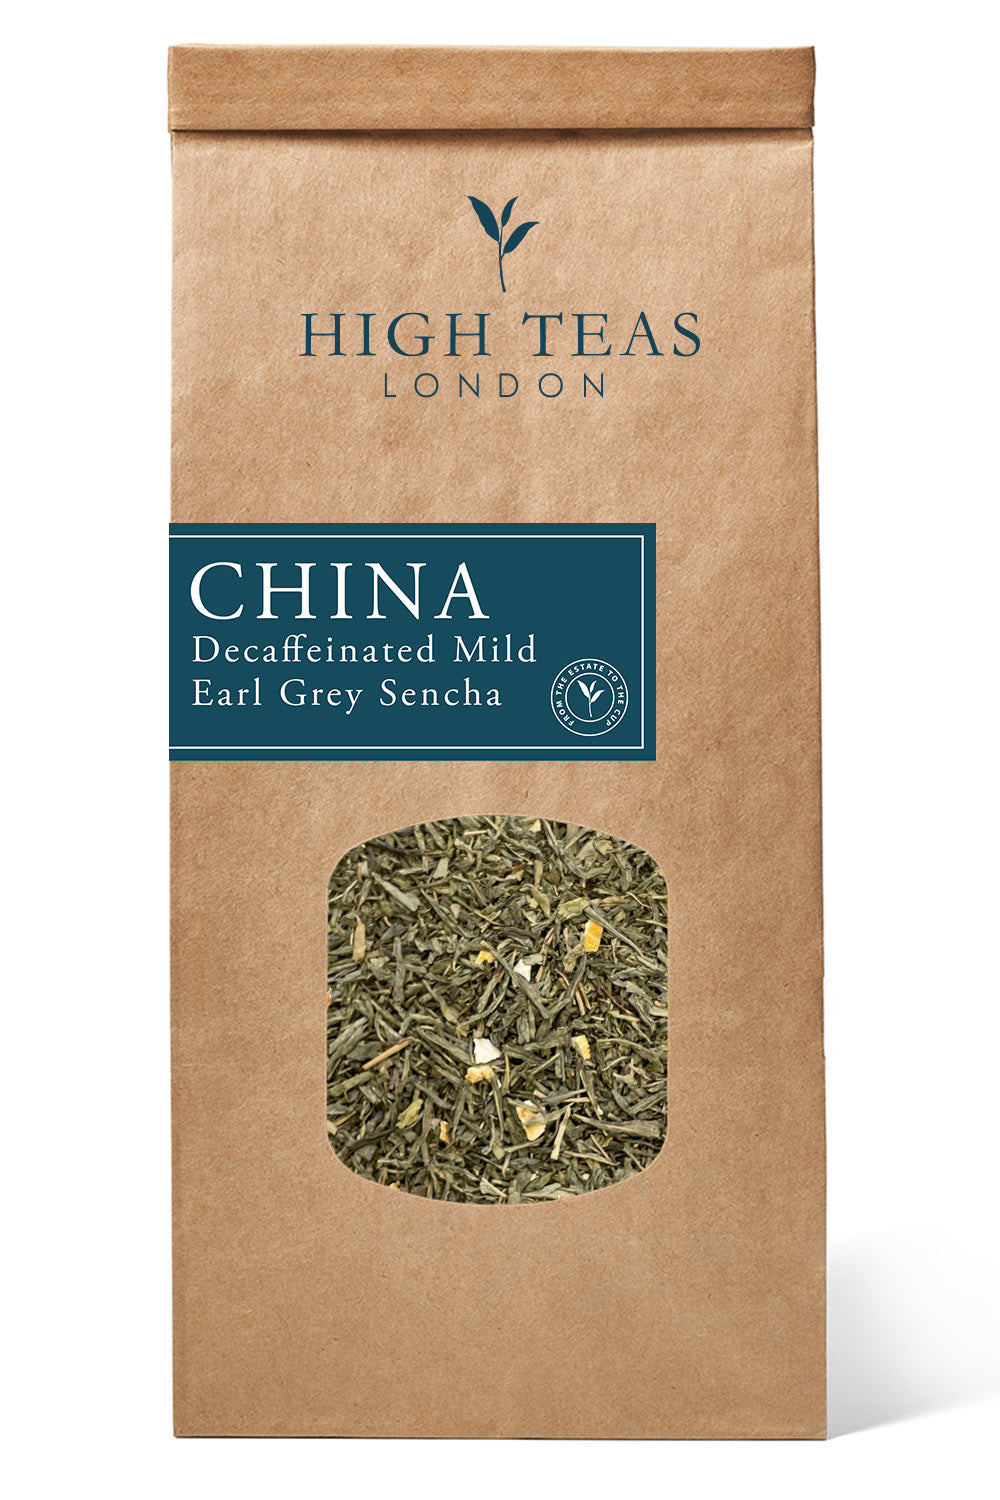 Decaffeinated Mild Earl Grey Sencha-250g-Loose Leaf Tea-High Teas